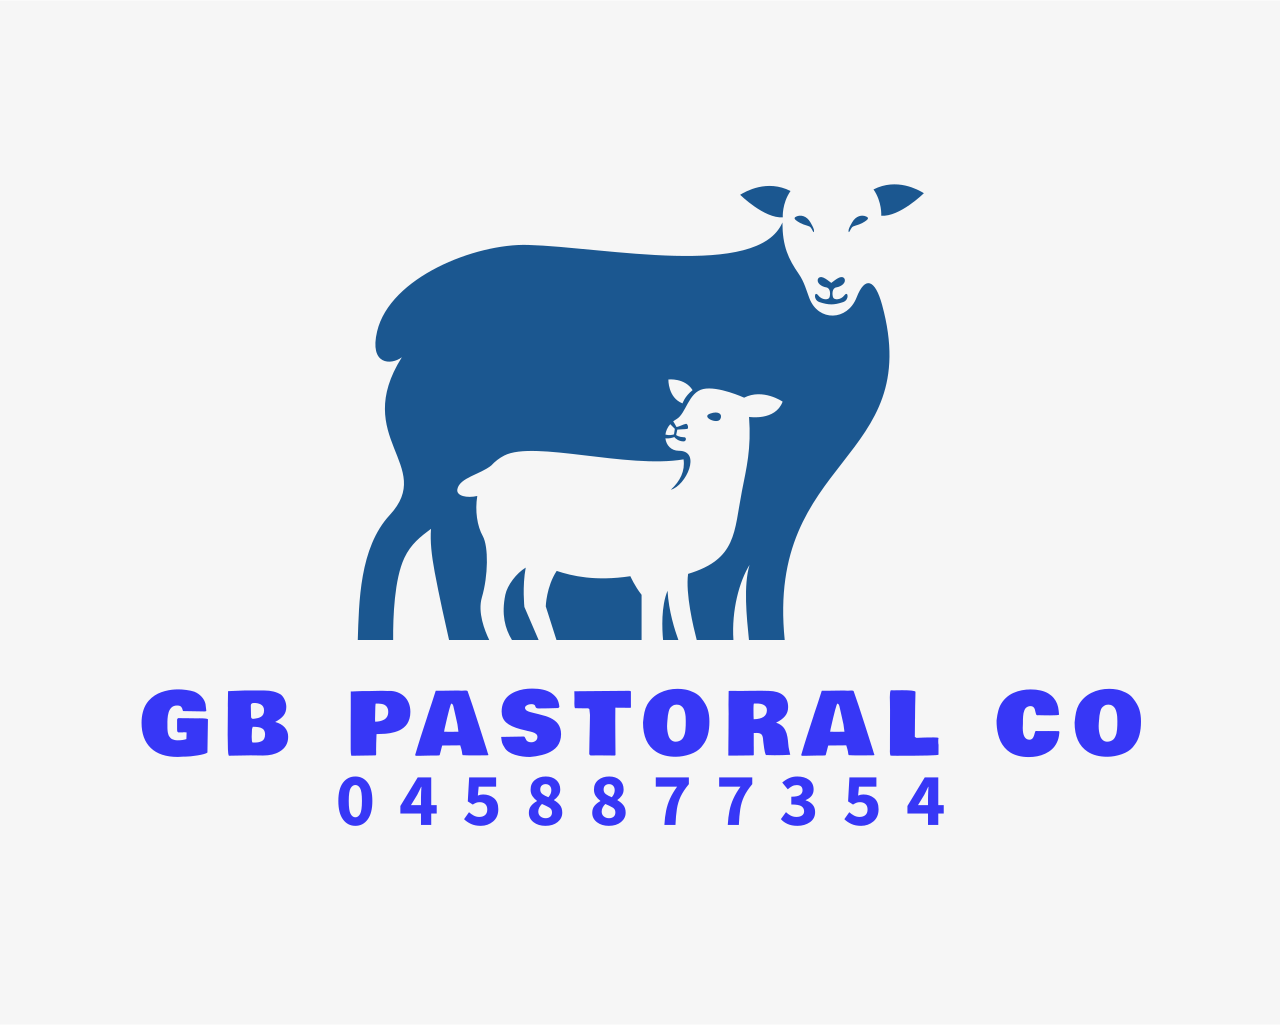 GB PASTORAL CO's web page